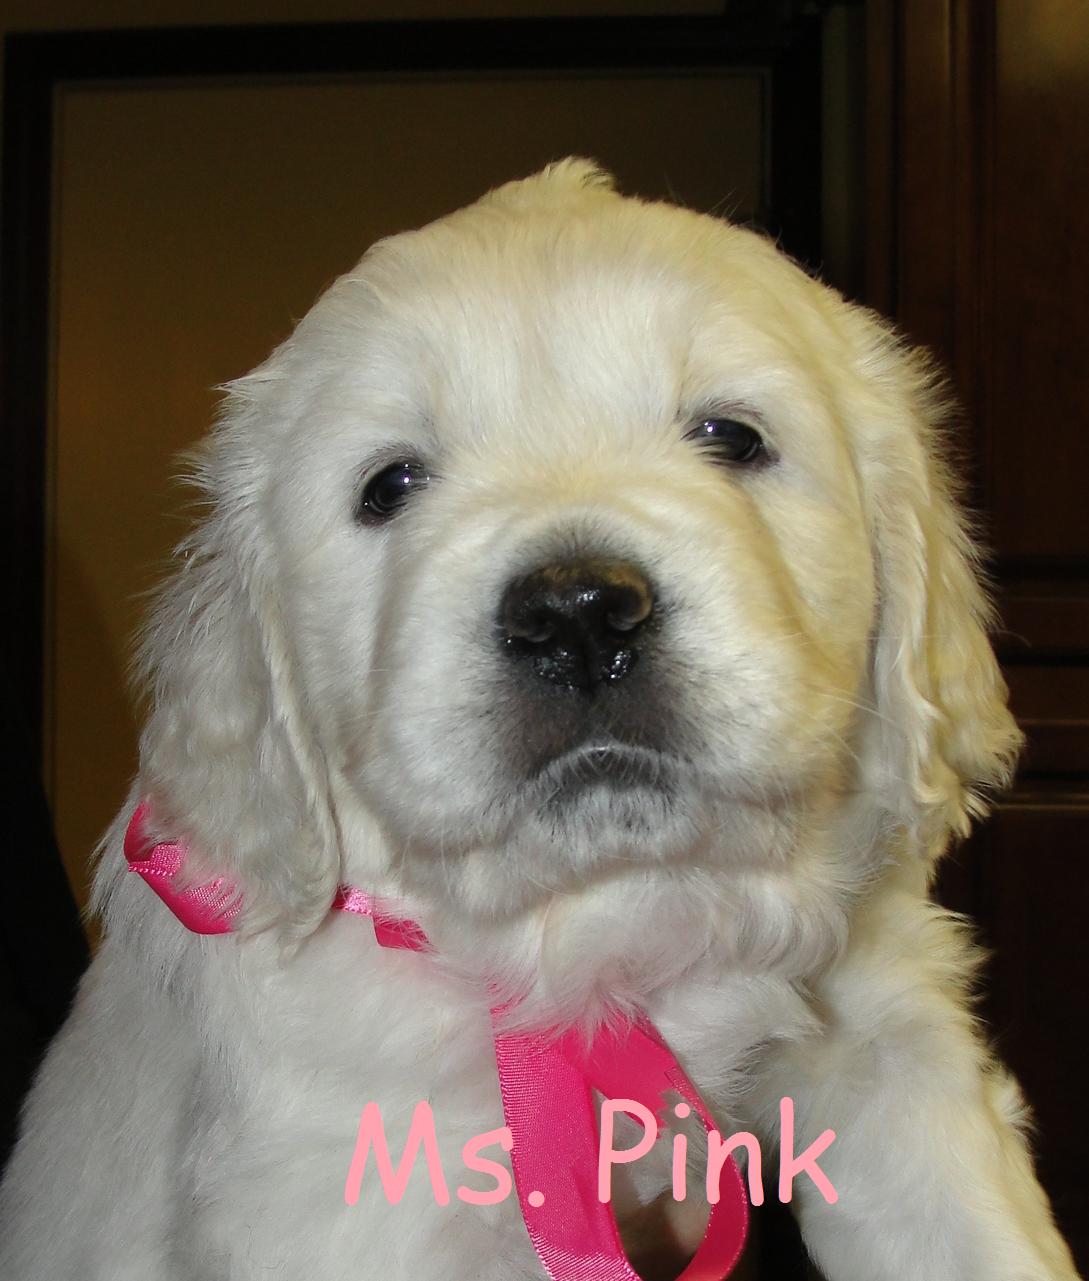 Ms. Pink